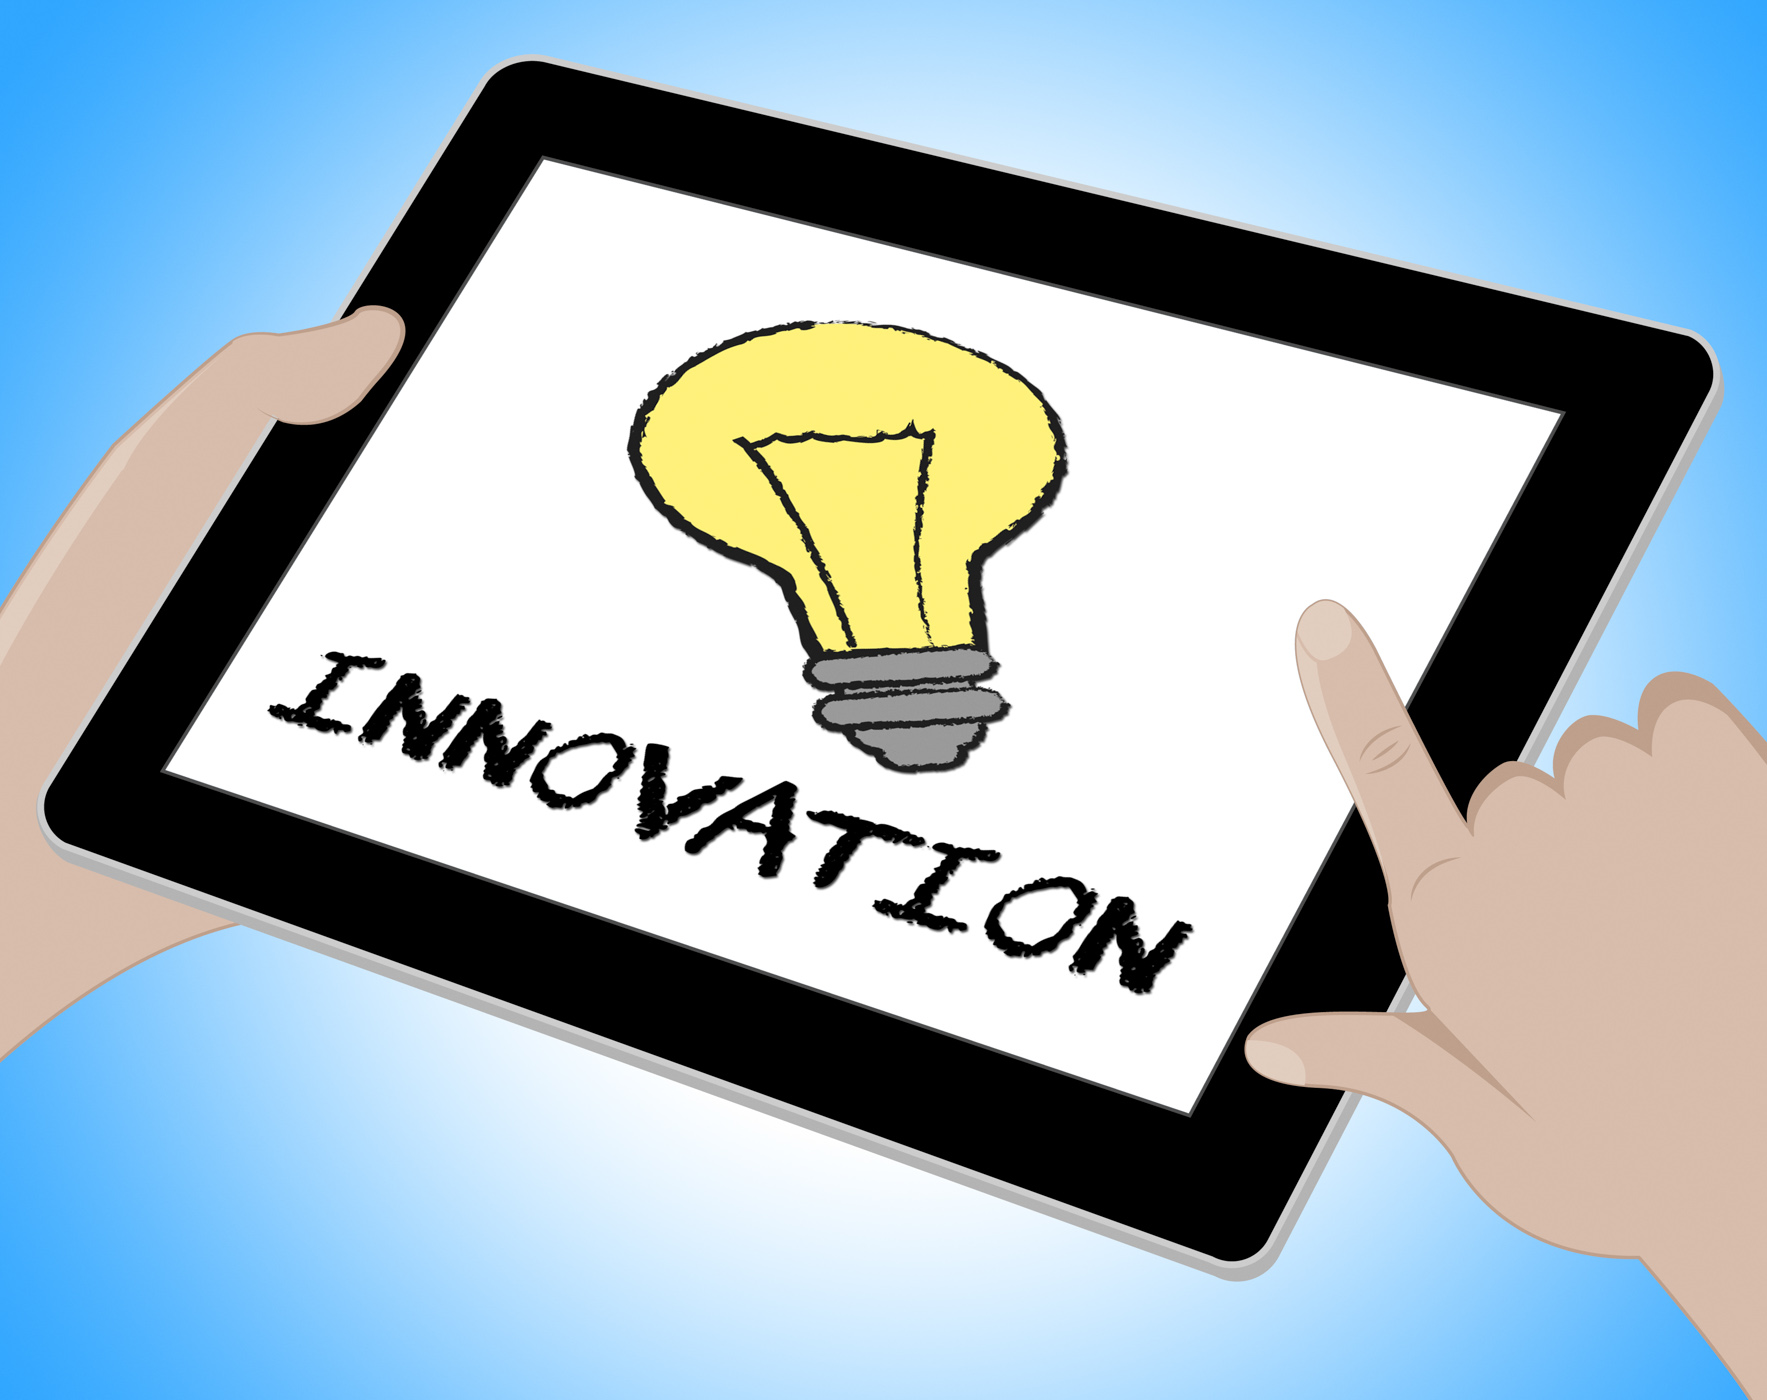 Innovation online means creative breakthrough 3d illustration photo